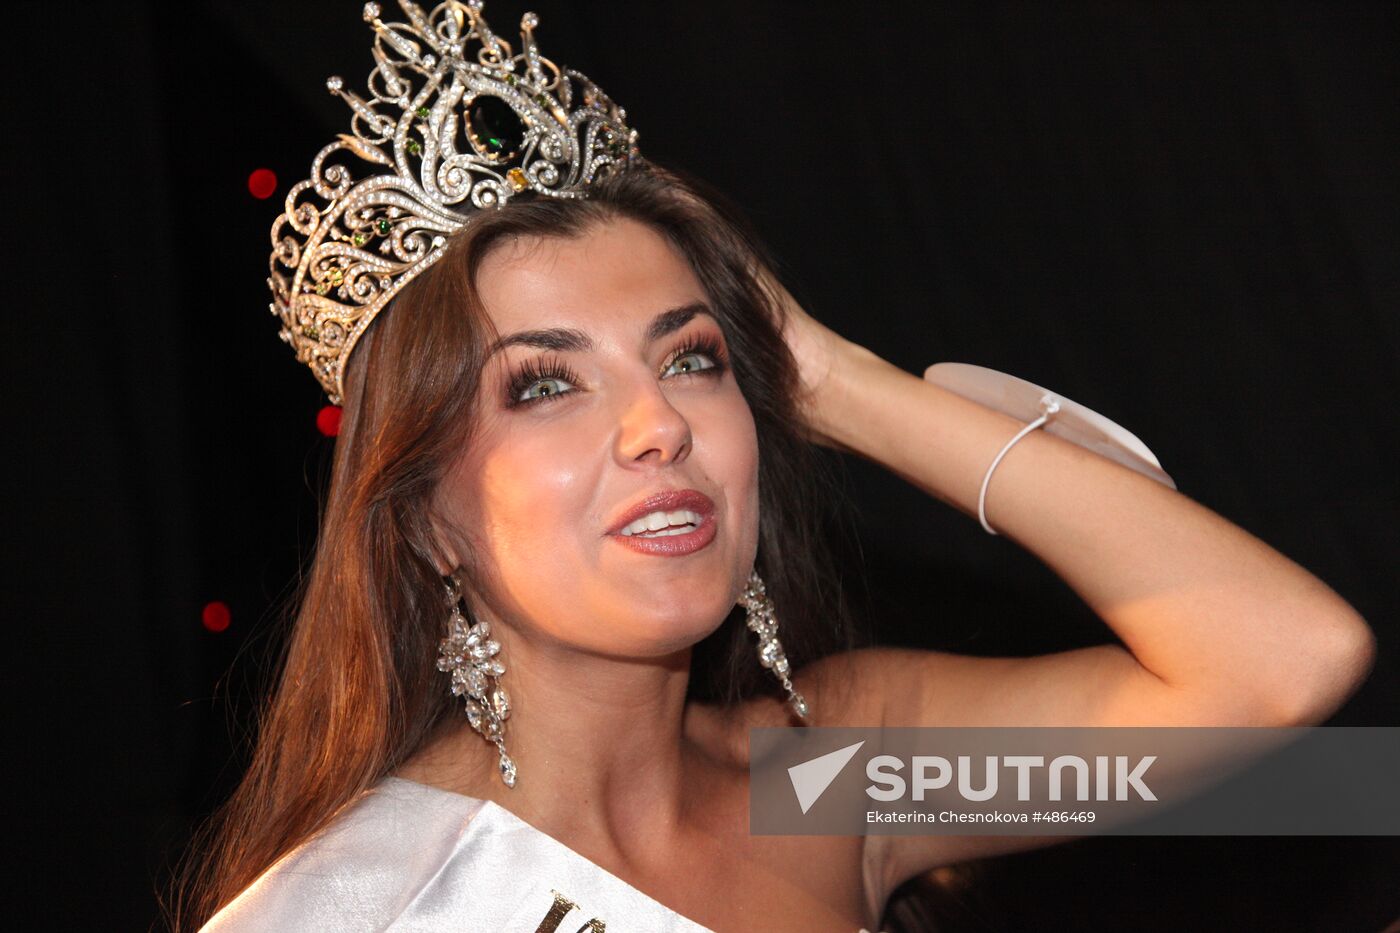 Yevgenia Lapova wins 15th Russian Beauty pageant